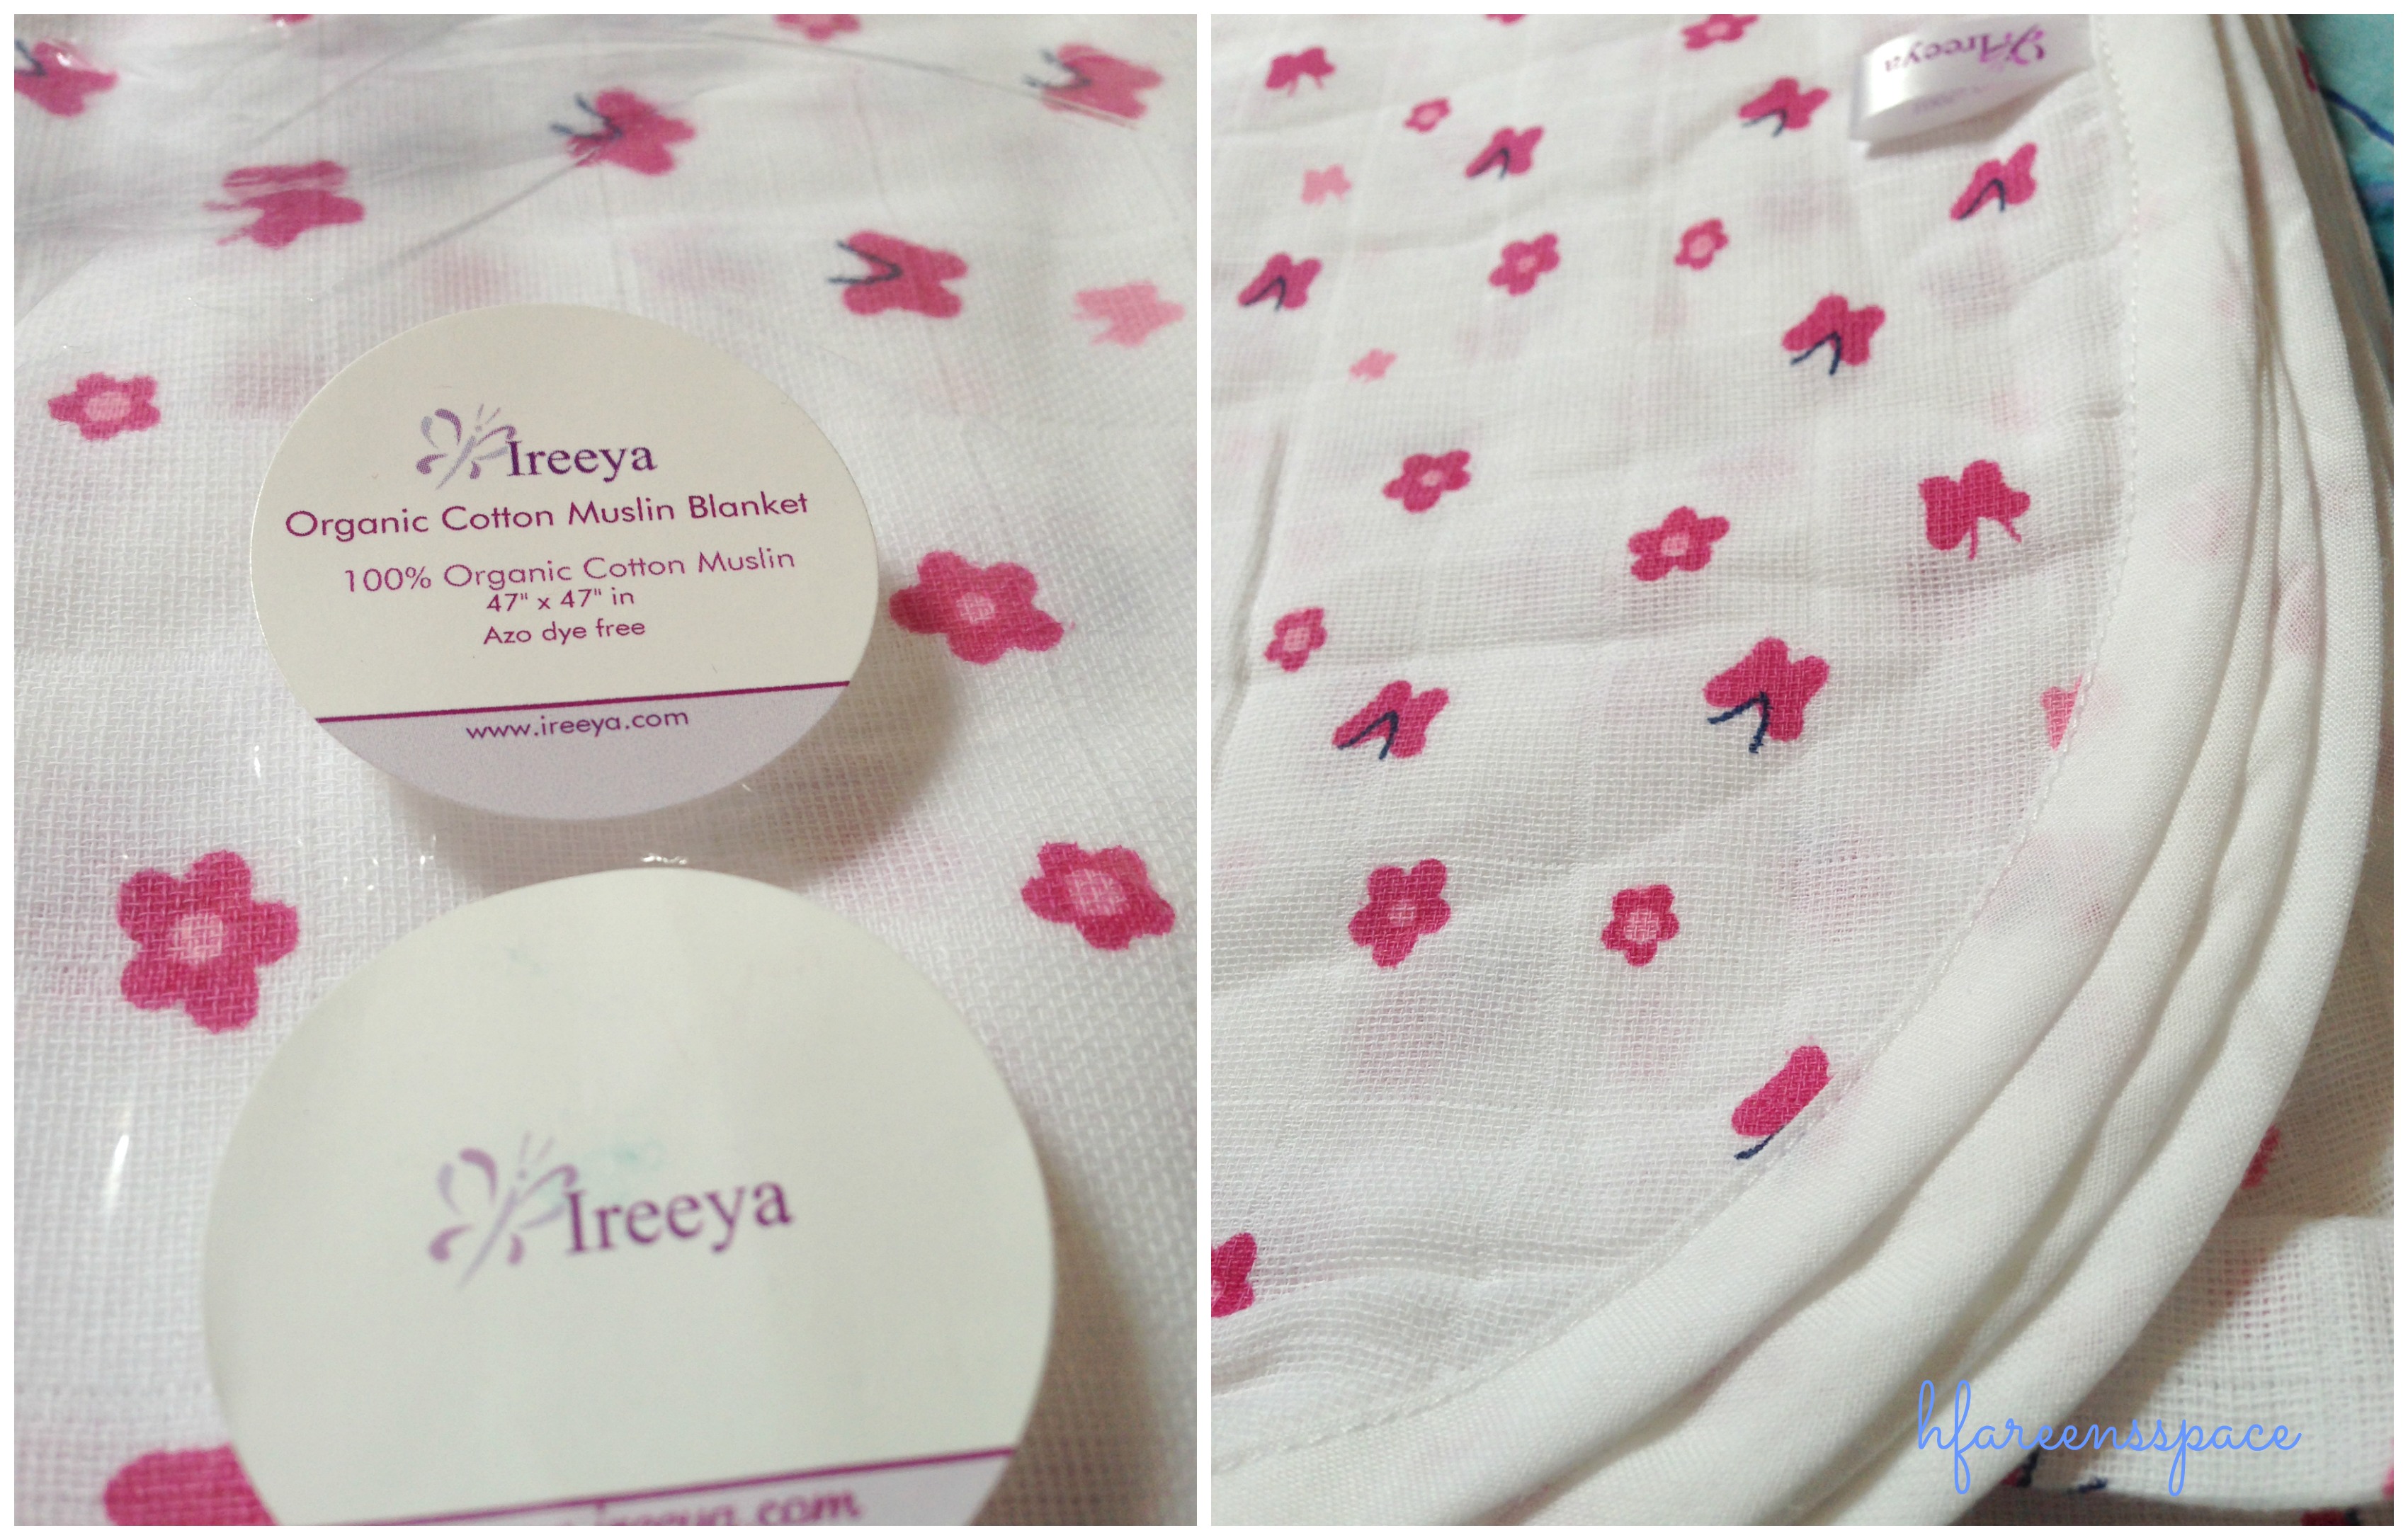 Ireeya Organic Cotton Muslin Blanket Review